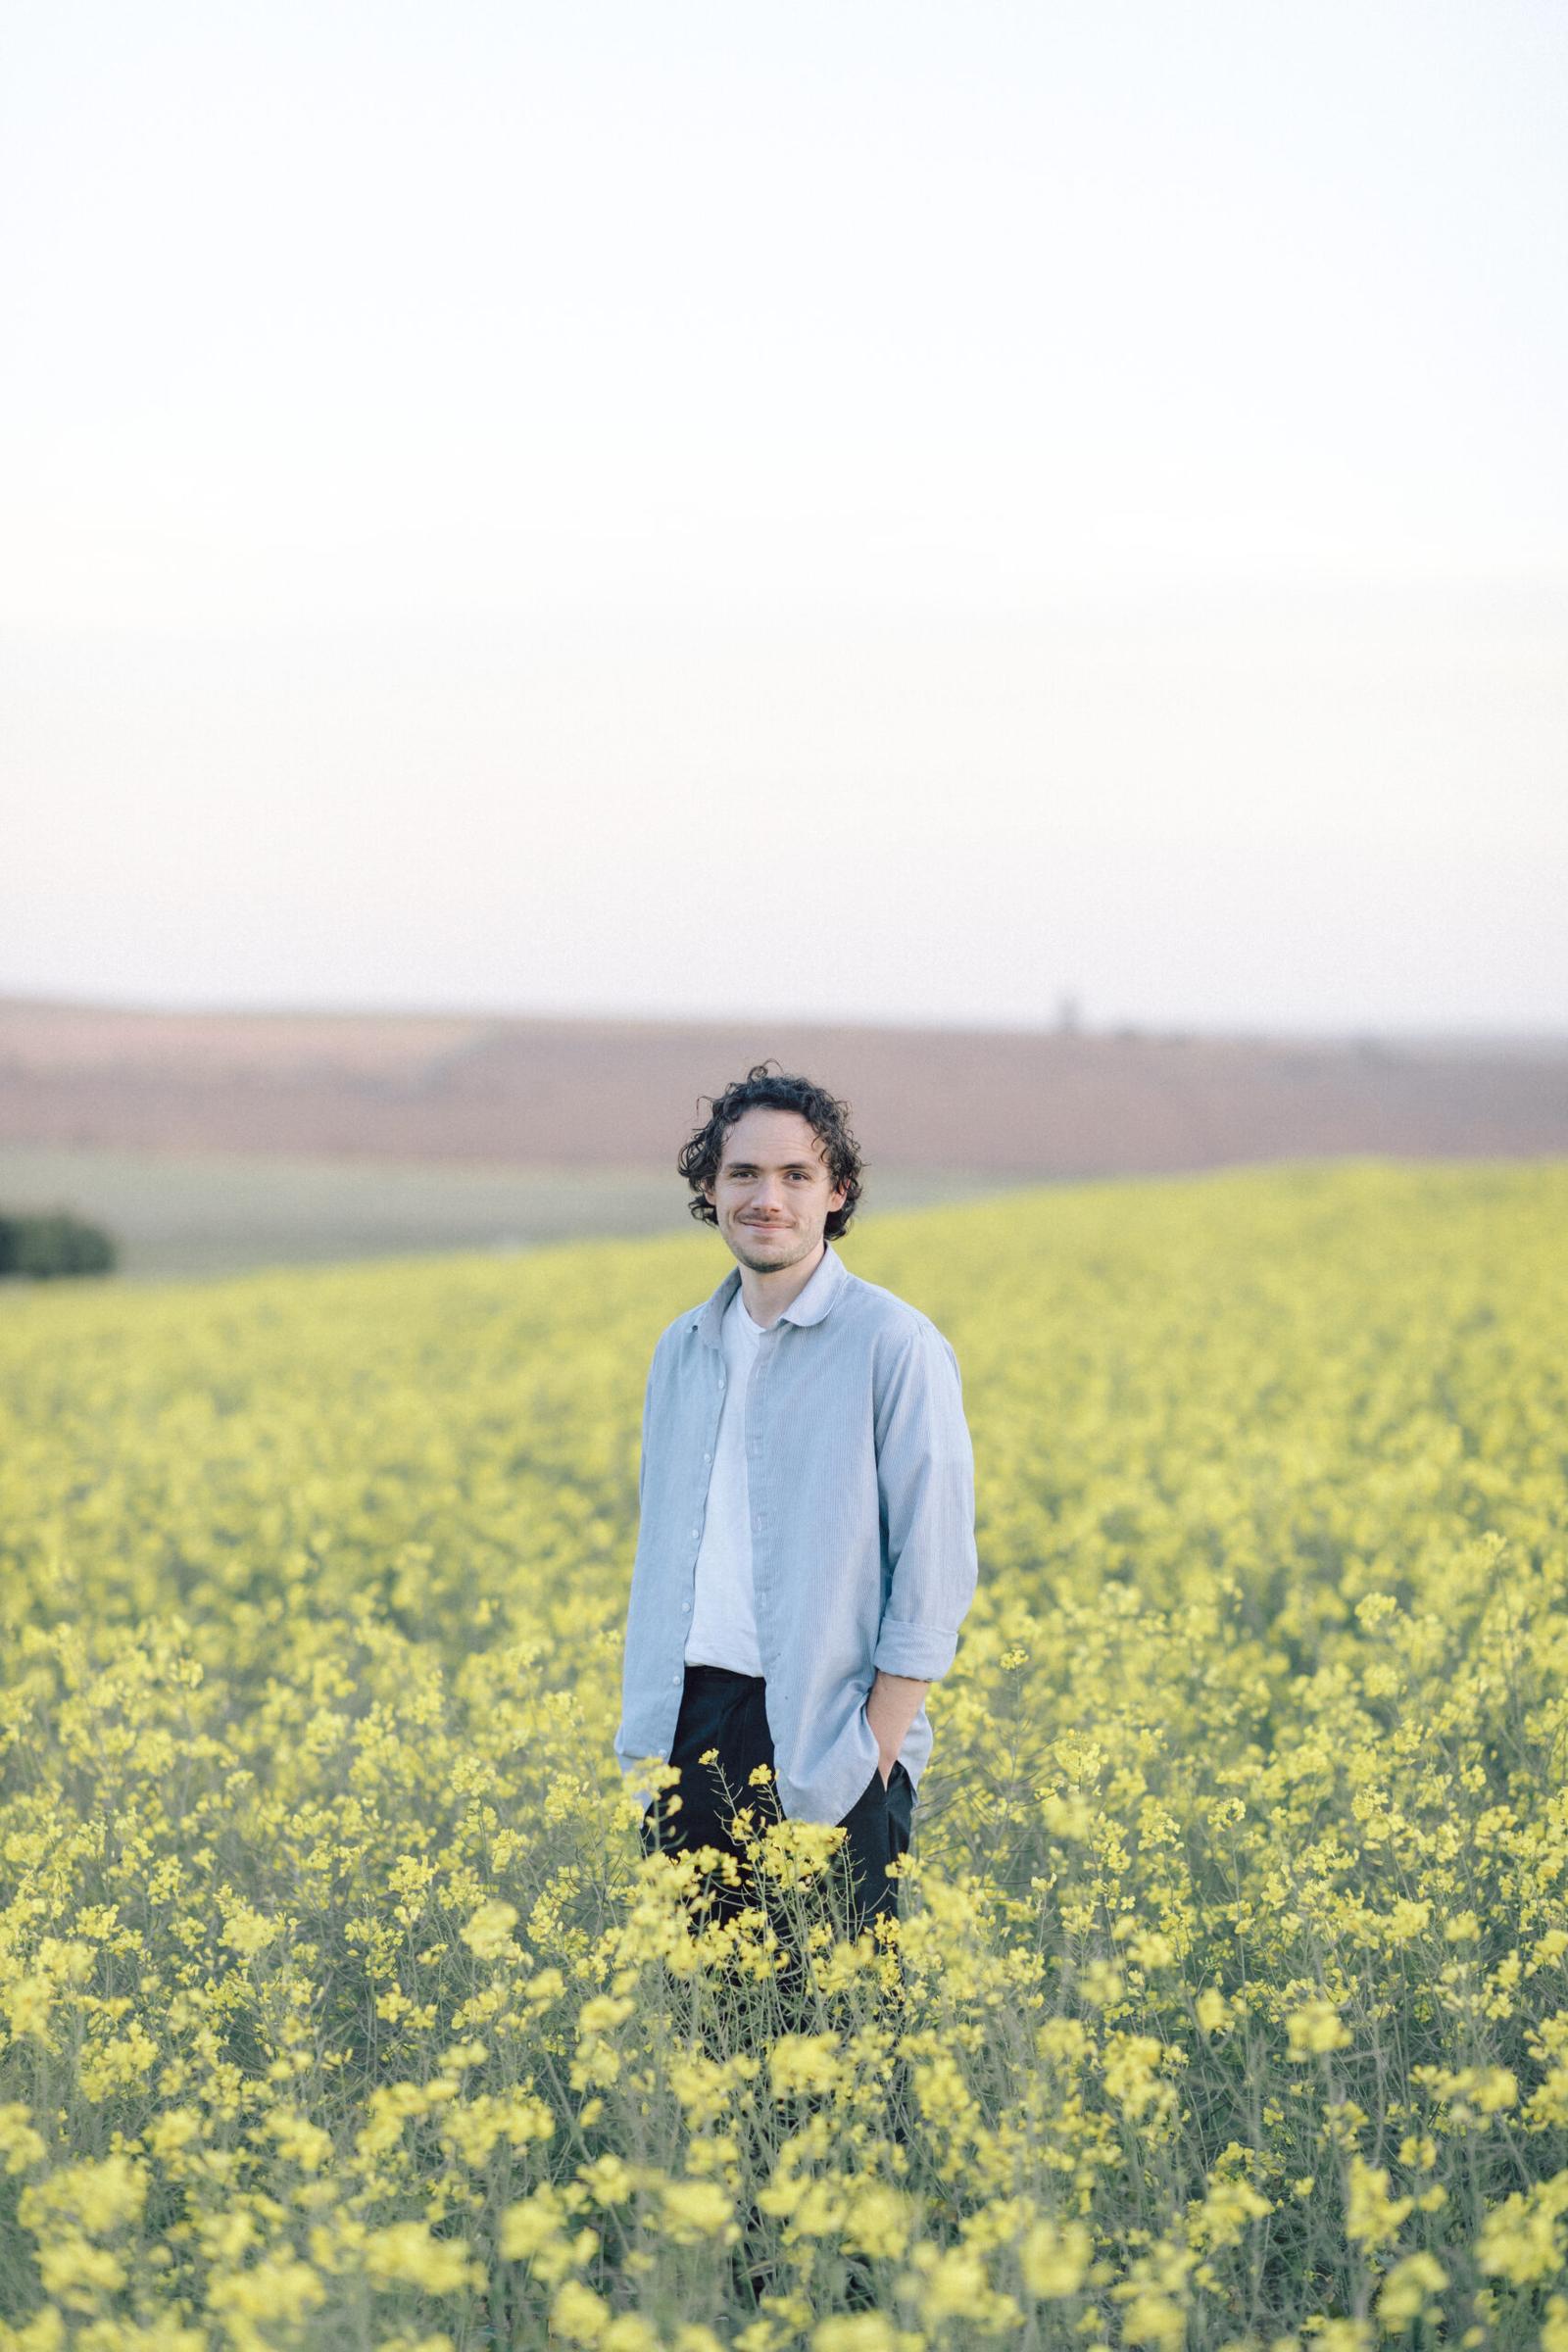 Cape Town wedding photographer. Damian Van Der Walt, stands in a field of yellow canola flowers